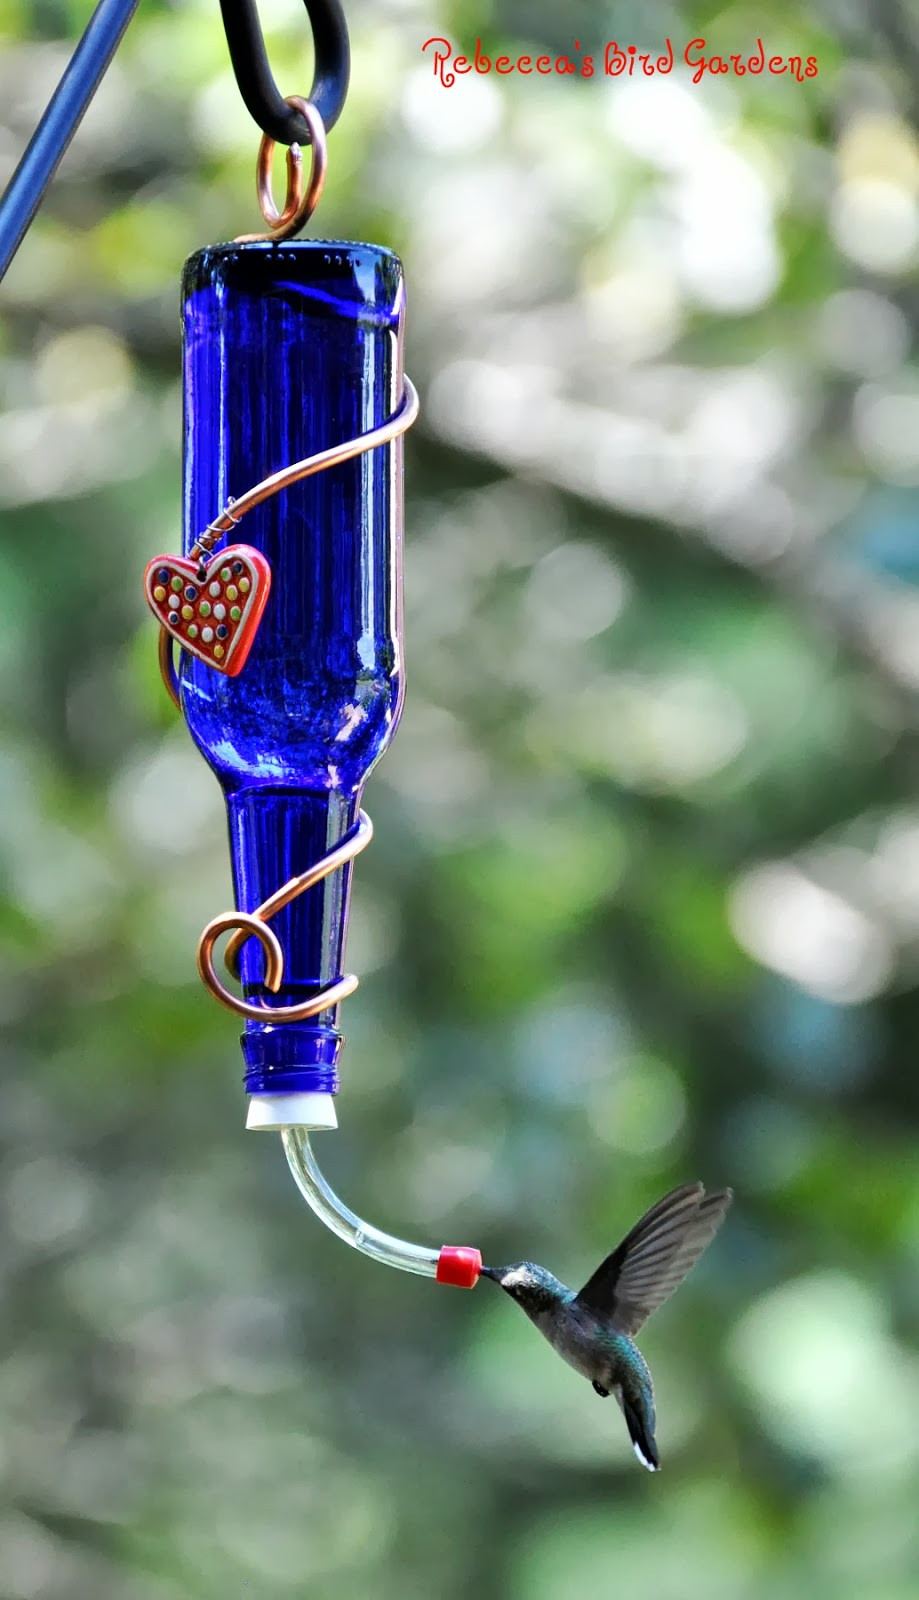 Best ideas about DIY Hummingbird Feeder
. Save or Pin Rebecca s Bird Gardens Blog DIY Fruit and Hummingbird Feeders Now.